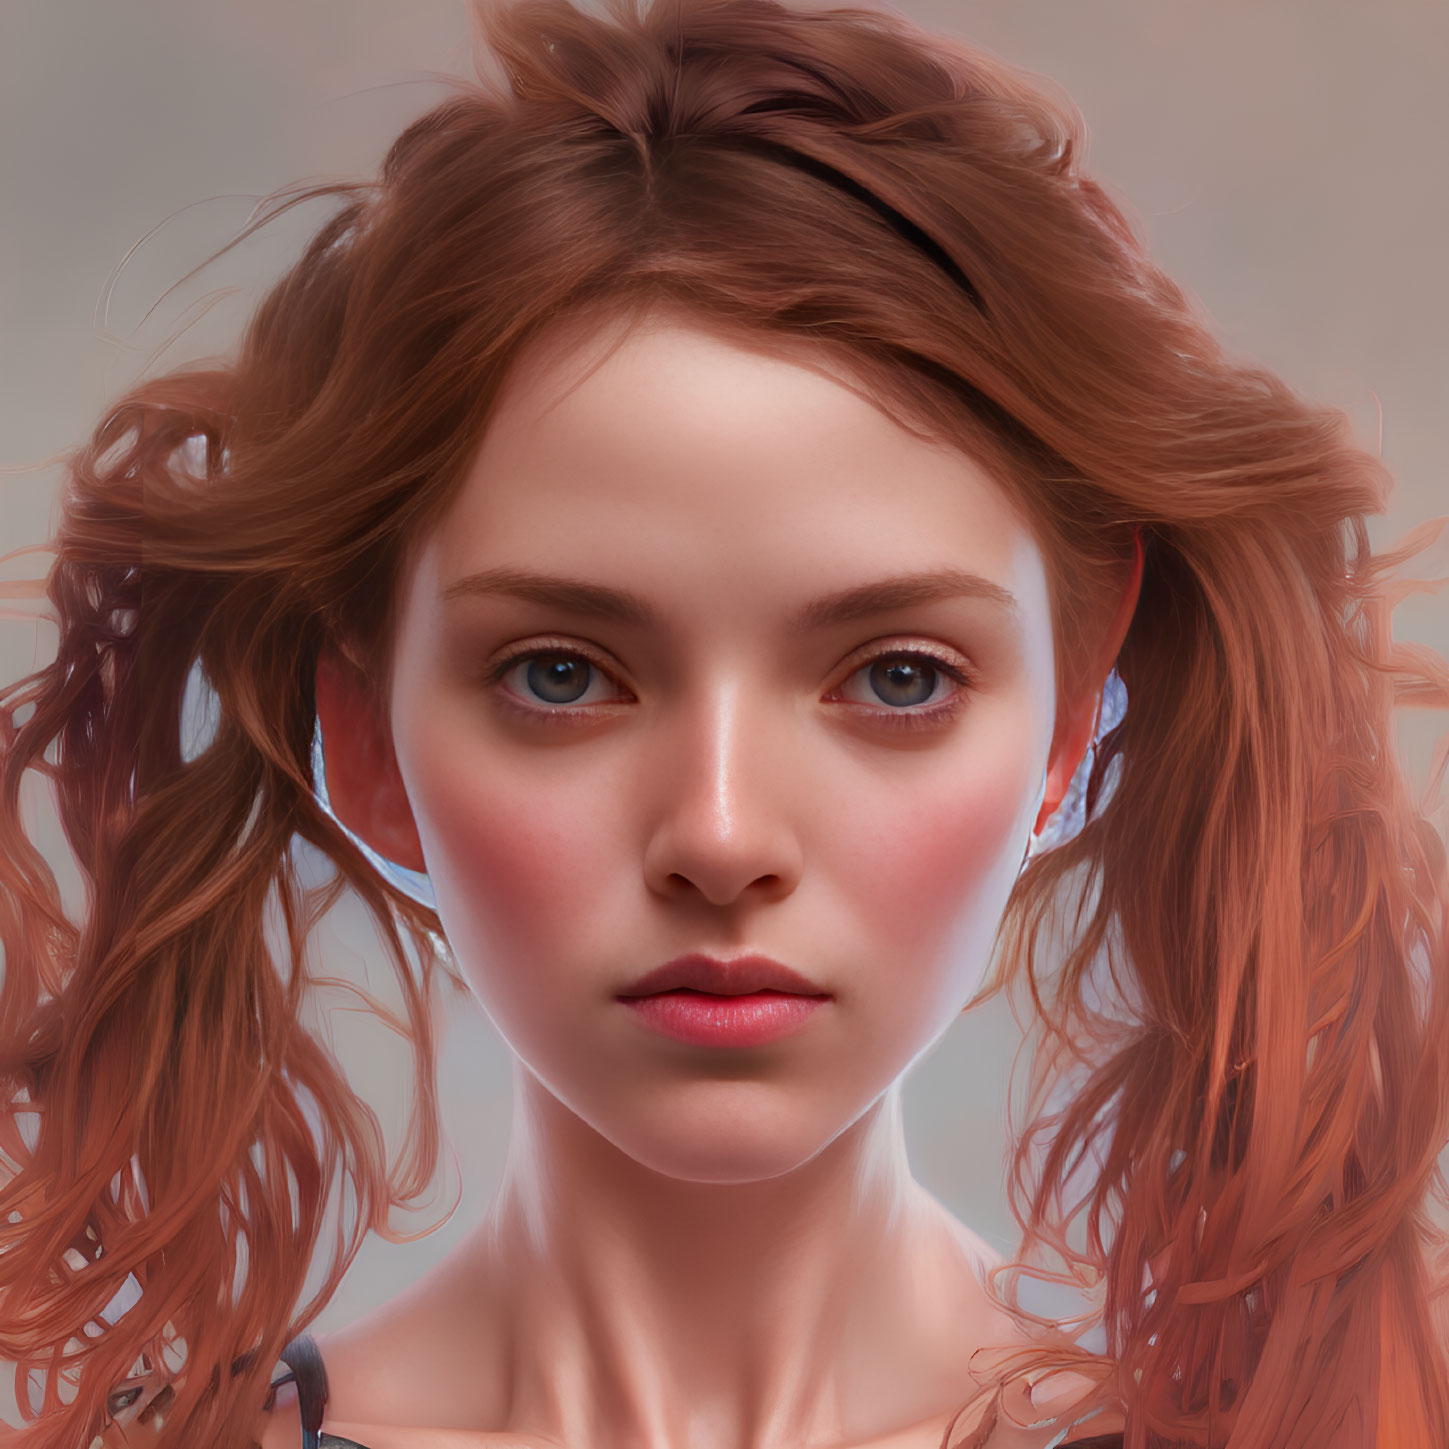 Portrait of a Woman with Auburn Hair and Hazel Eyes